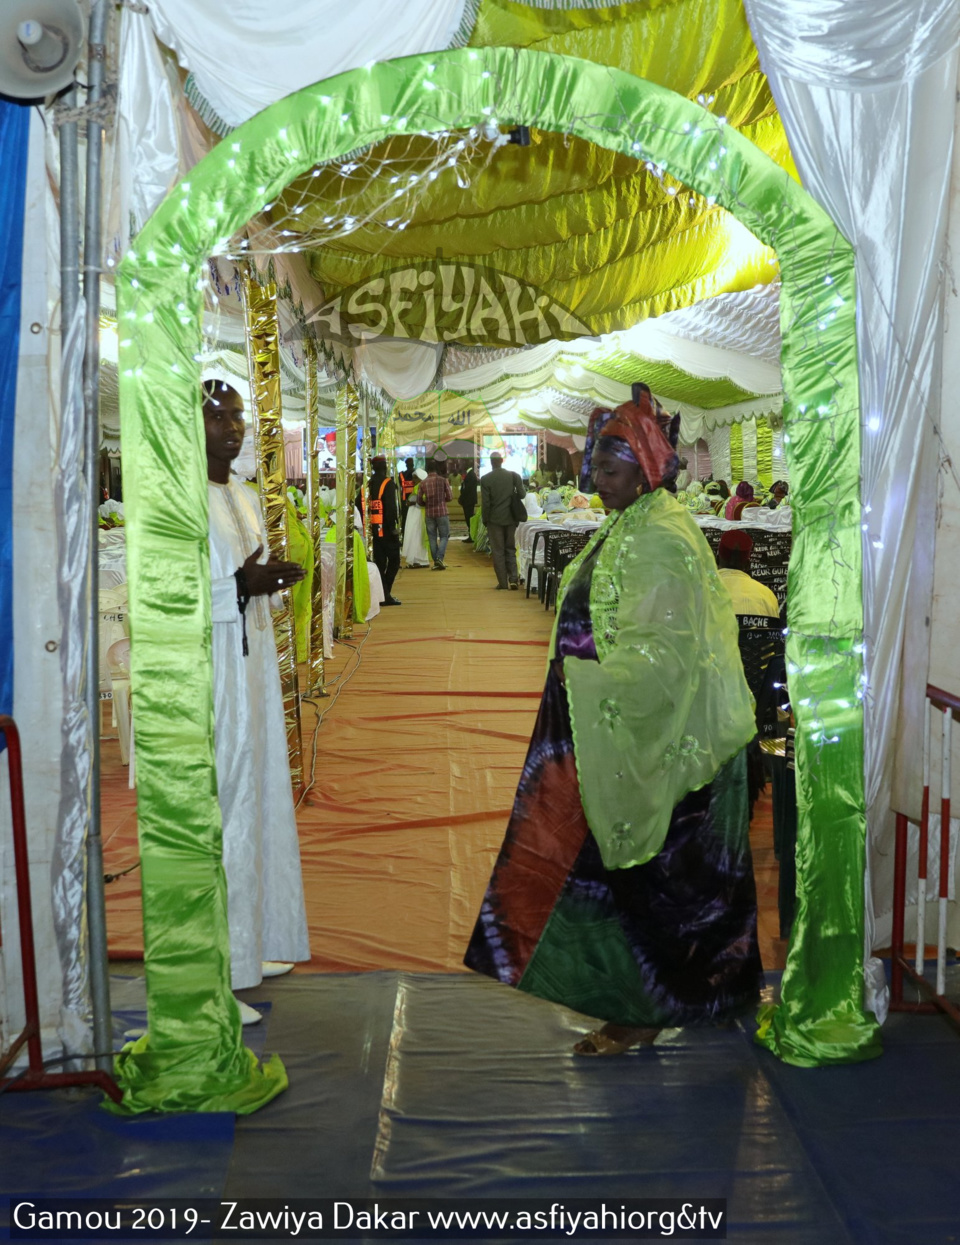 PHOTOS - ZAWIYA DAKAR - Les Images de l'exposition et de la nuit du Gamou 2019 de la Zawiya El Hadj Malick Sy de Dakar